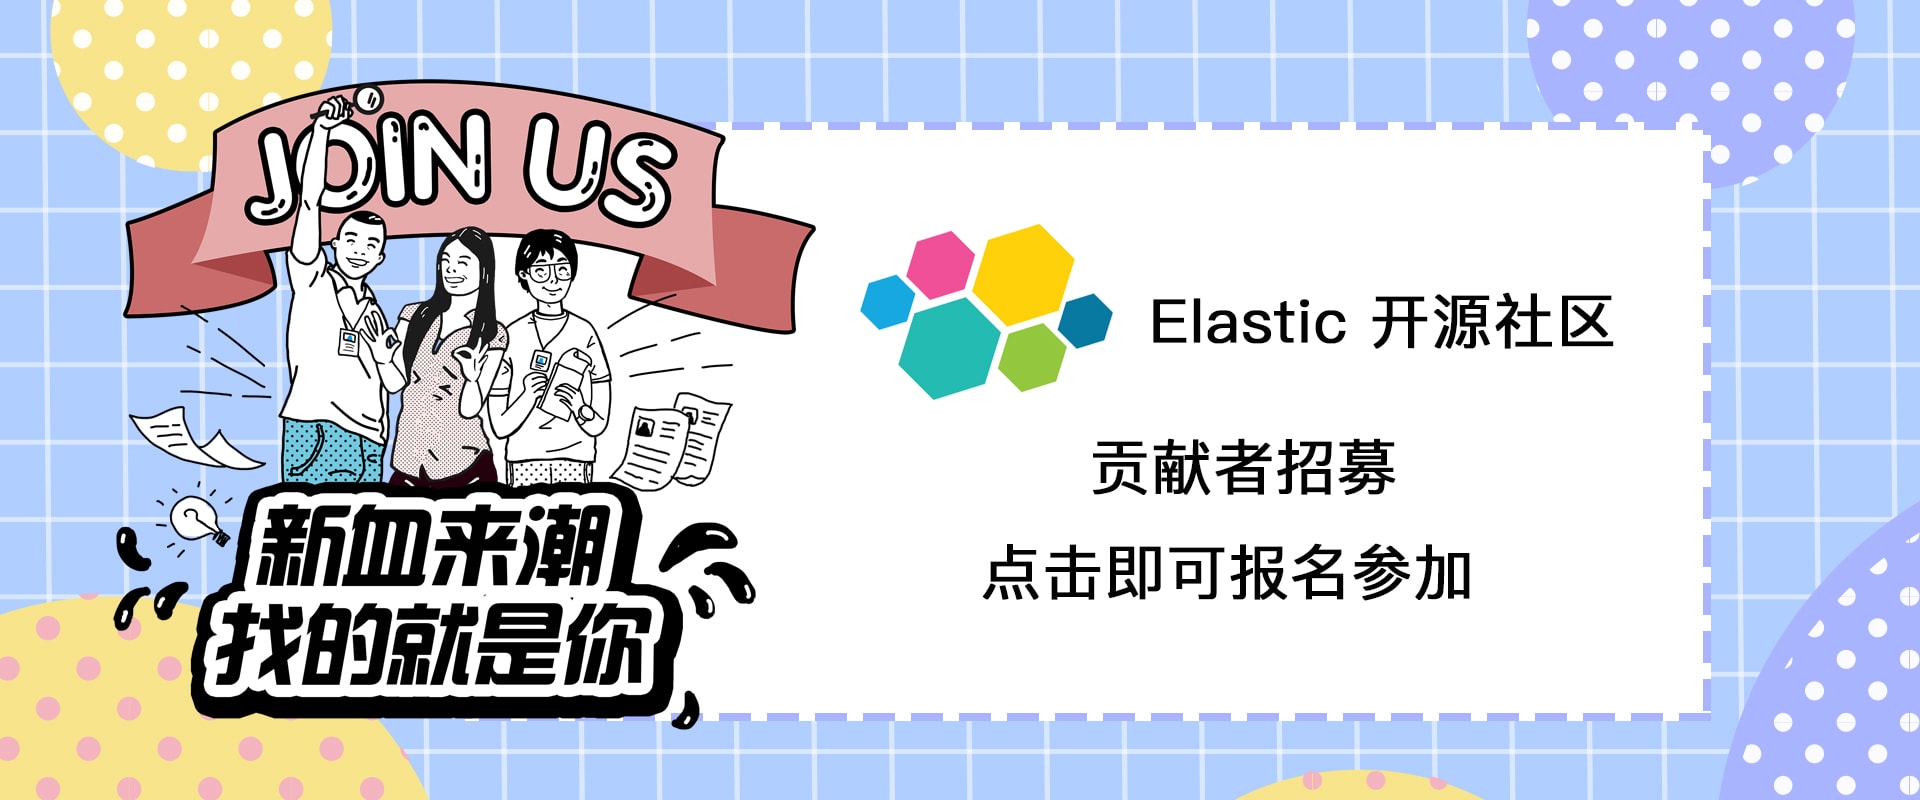 Elastic开源社区 招募开发者